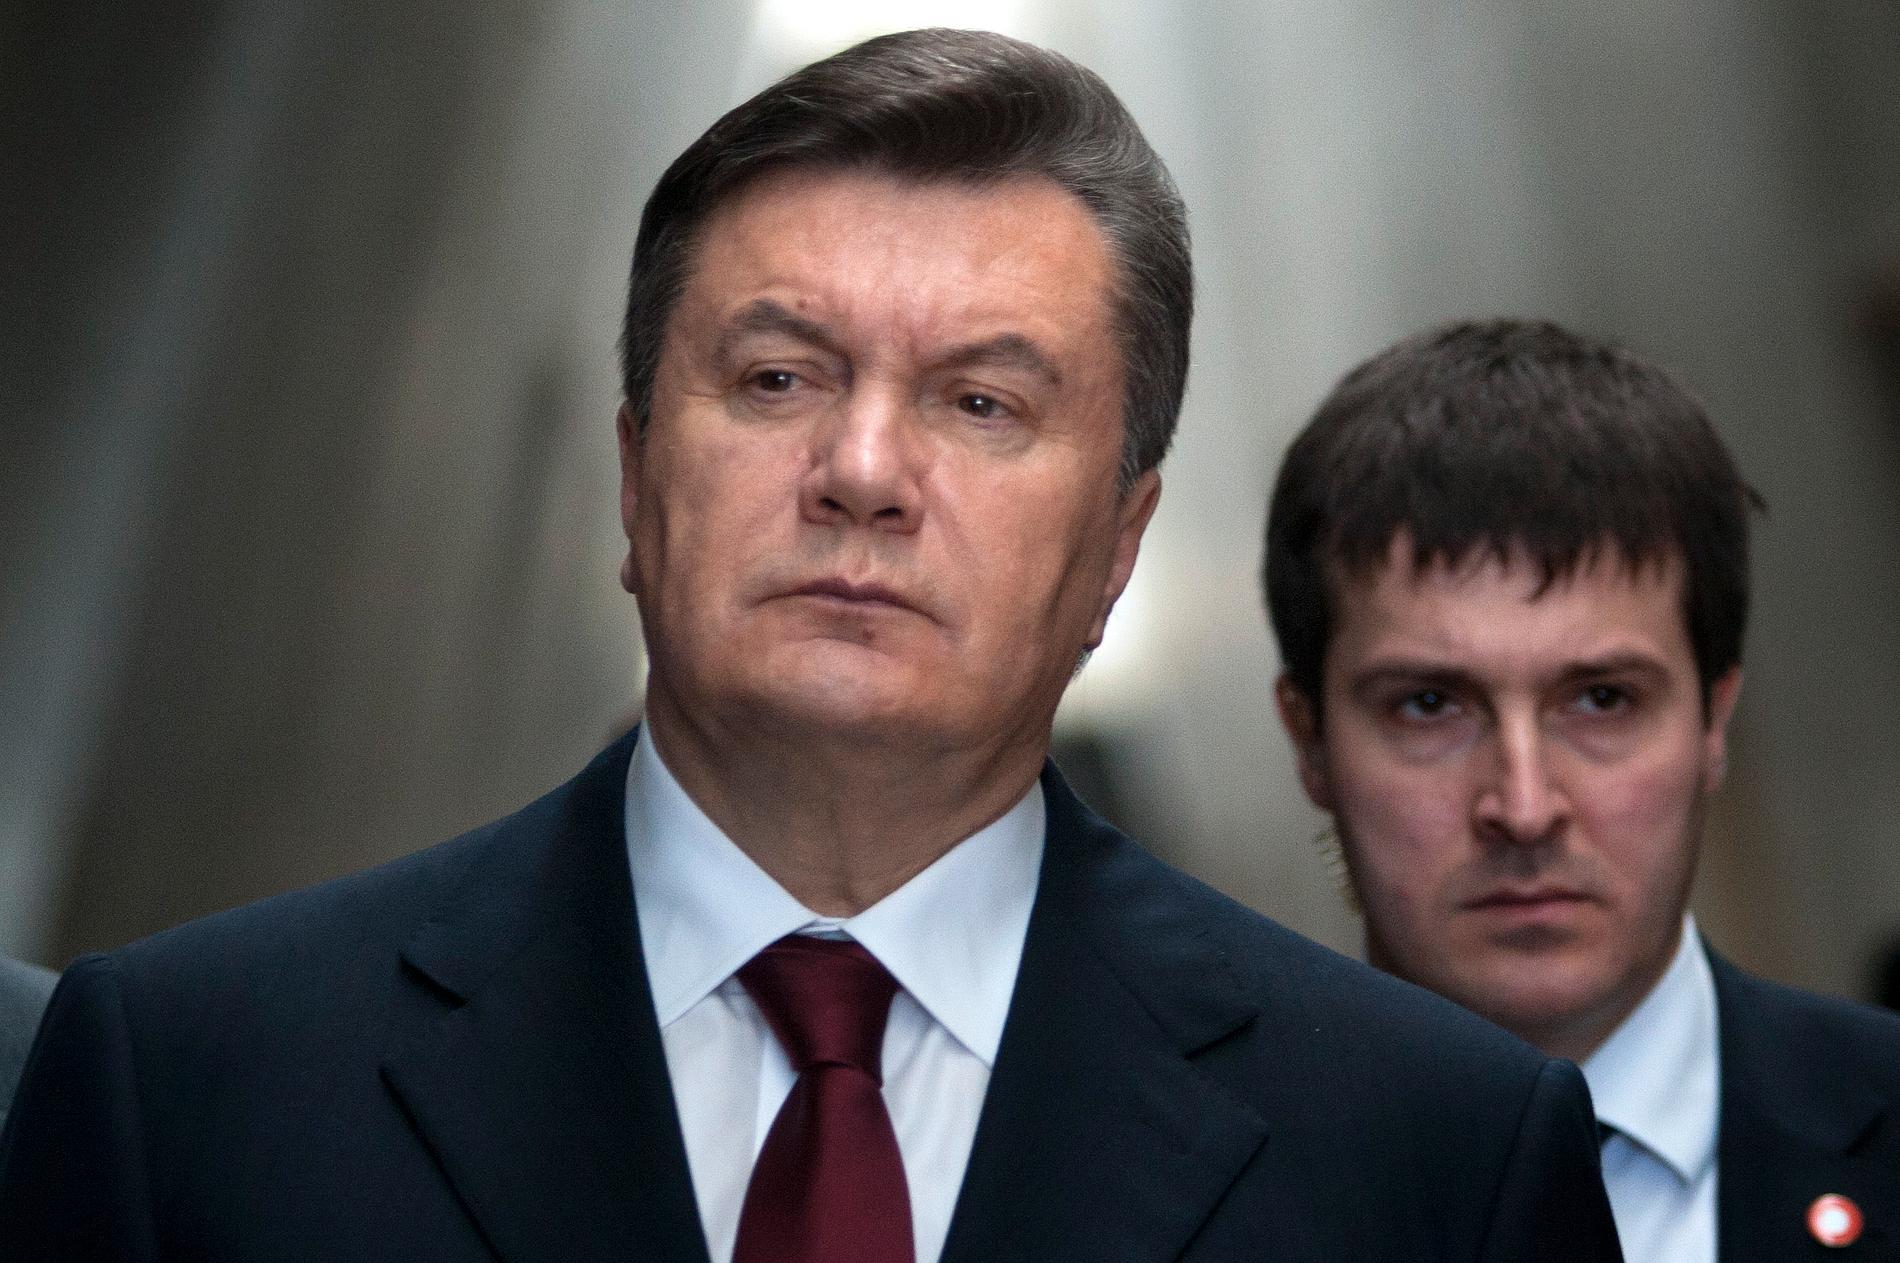 Ukrainas expresident Viktor Janukovytj 2011. Arkivbild.